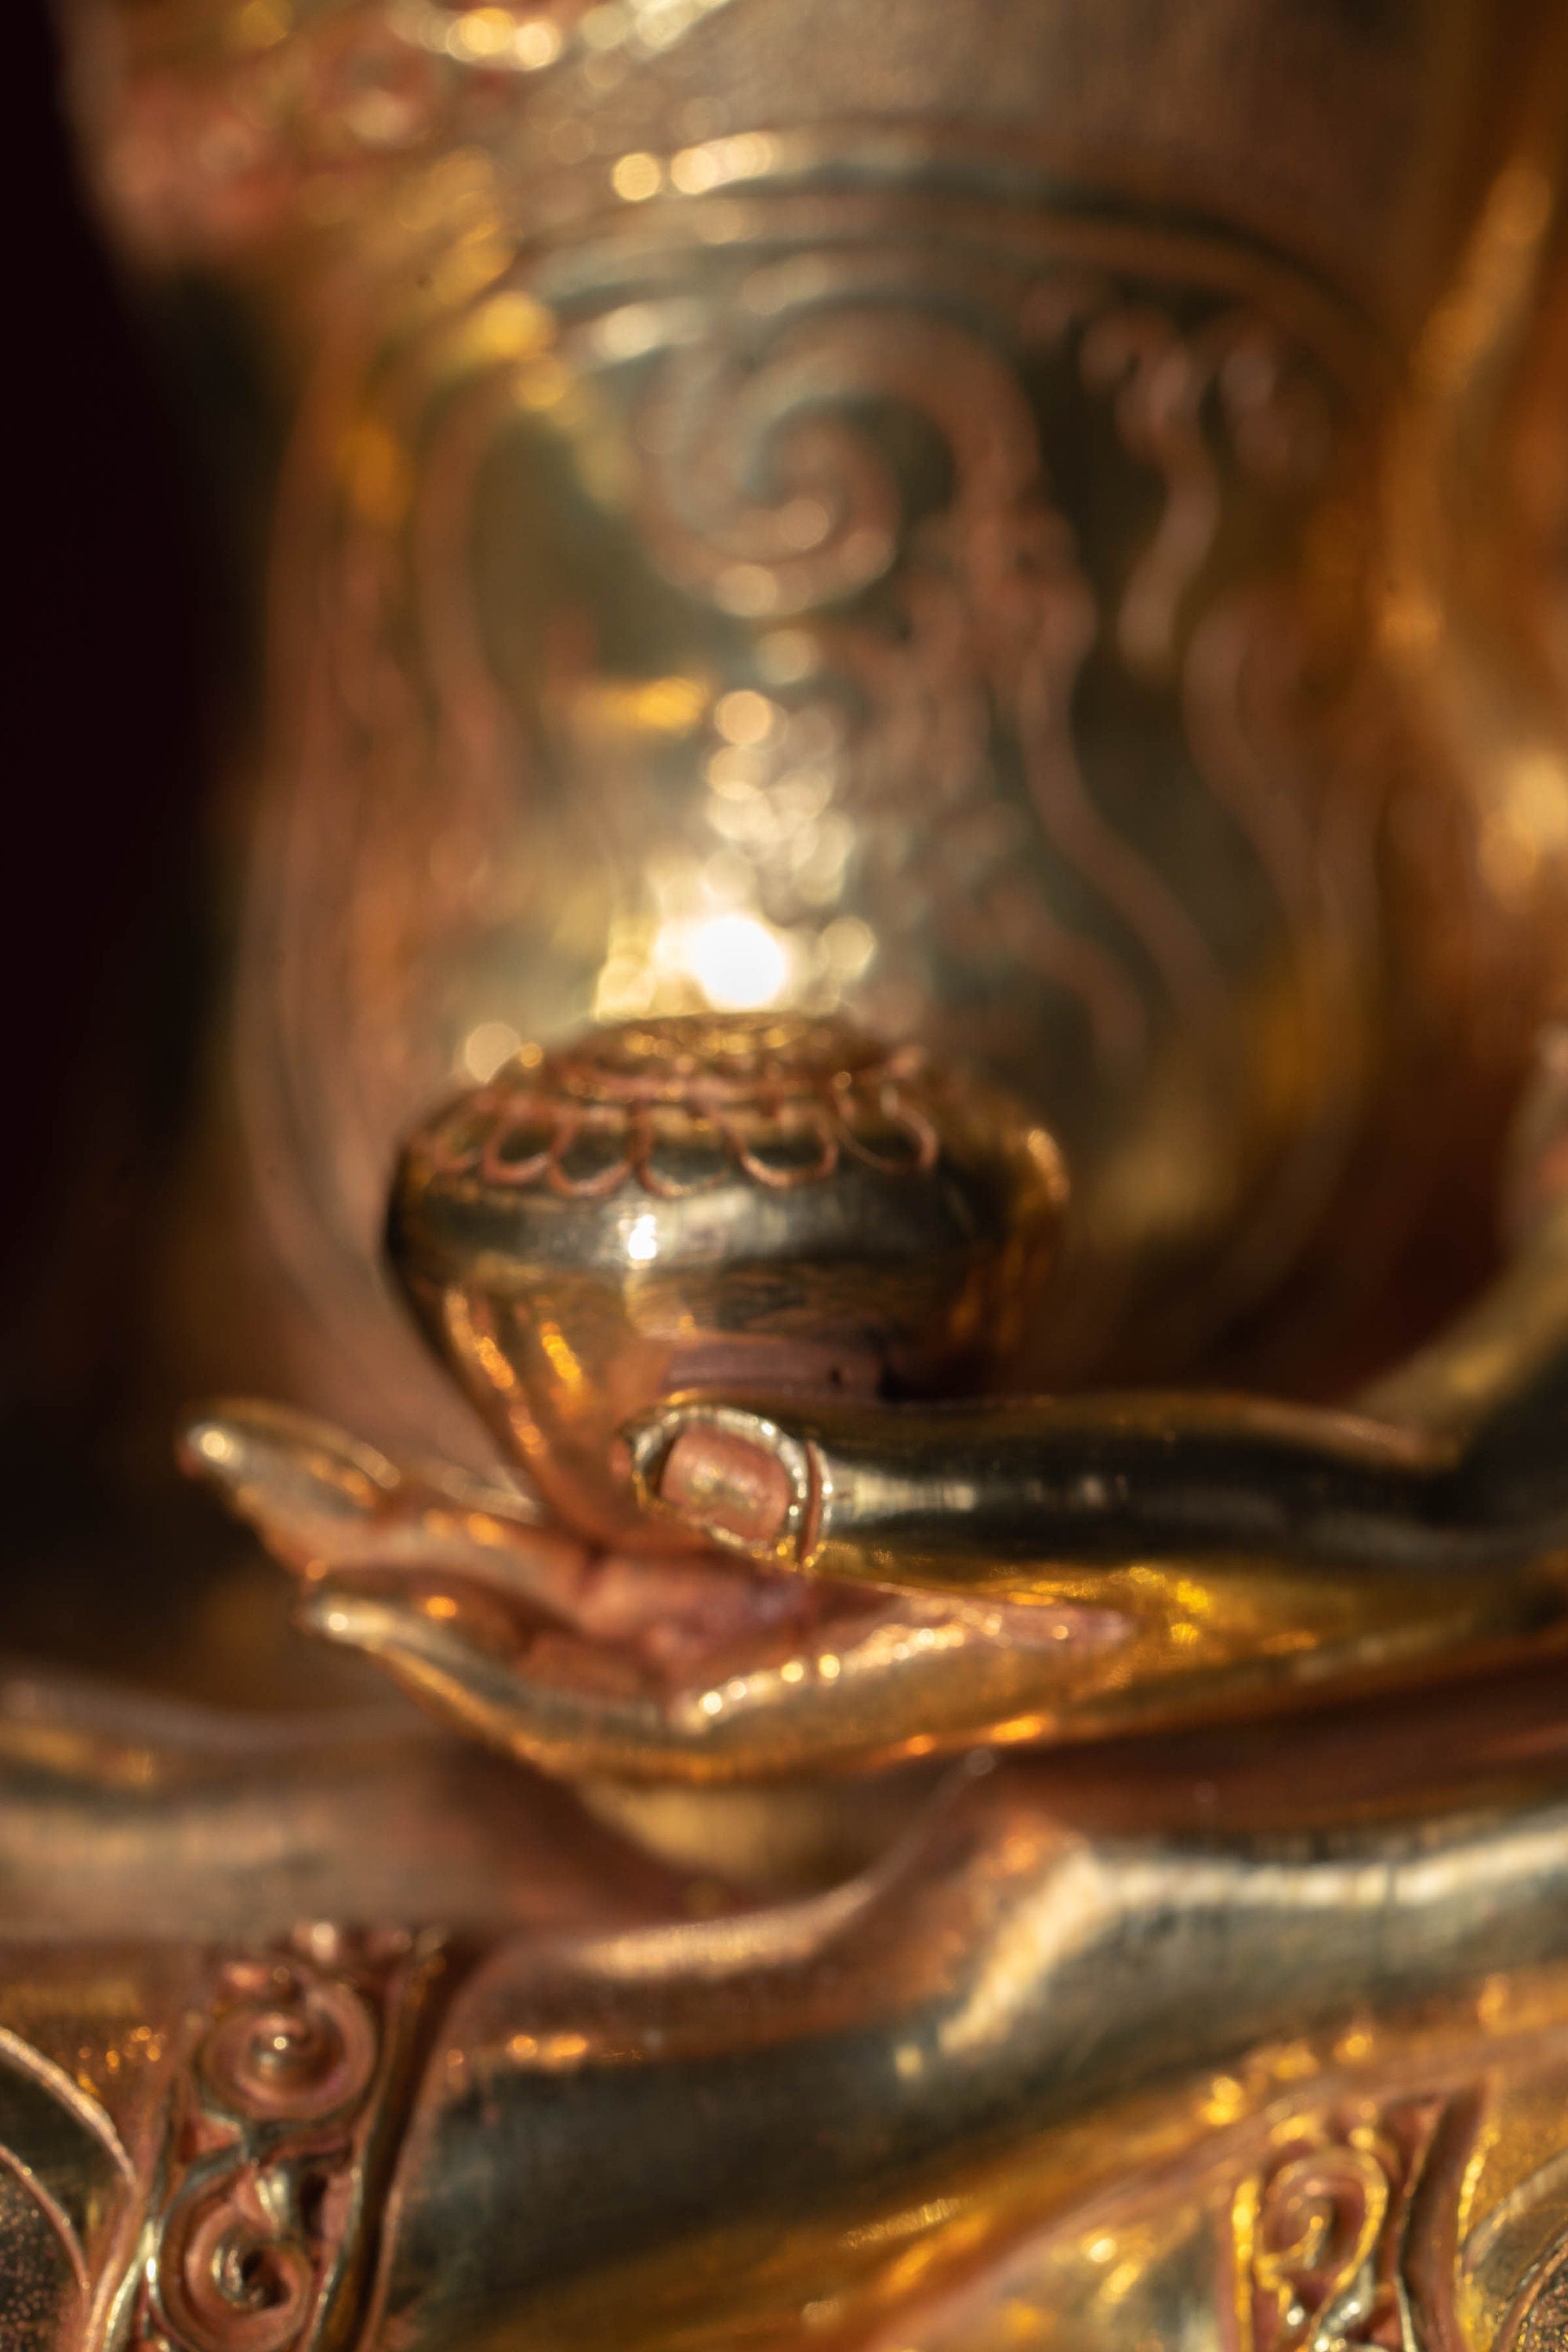 Handmade Shakyamuni Buddha statue - Lucky Thanka